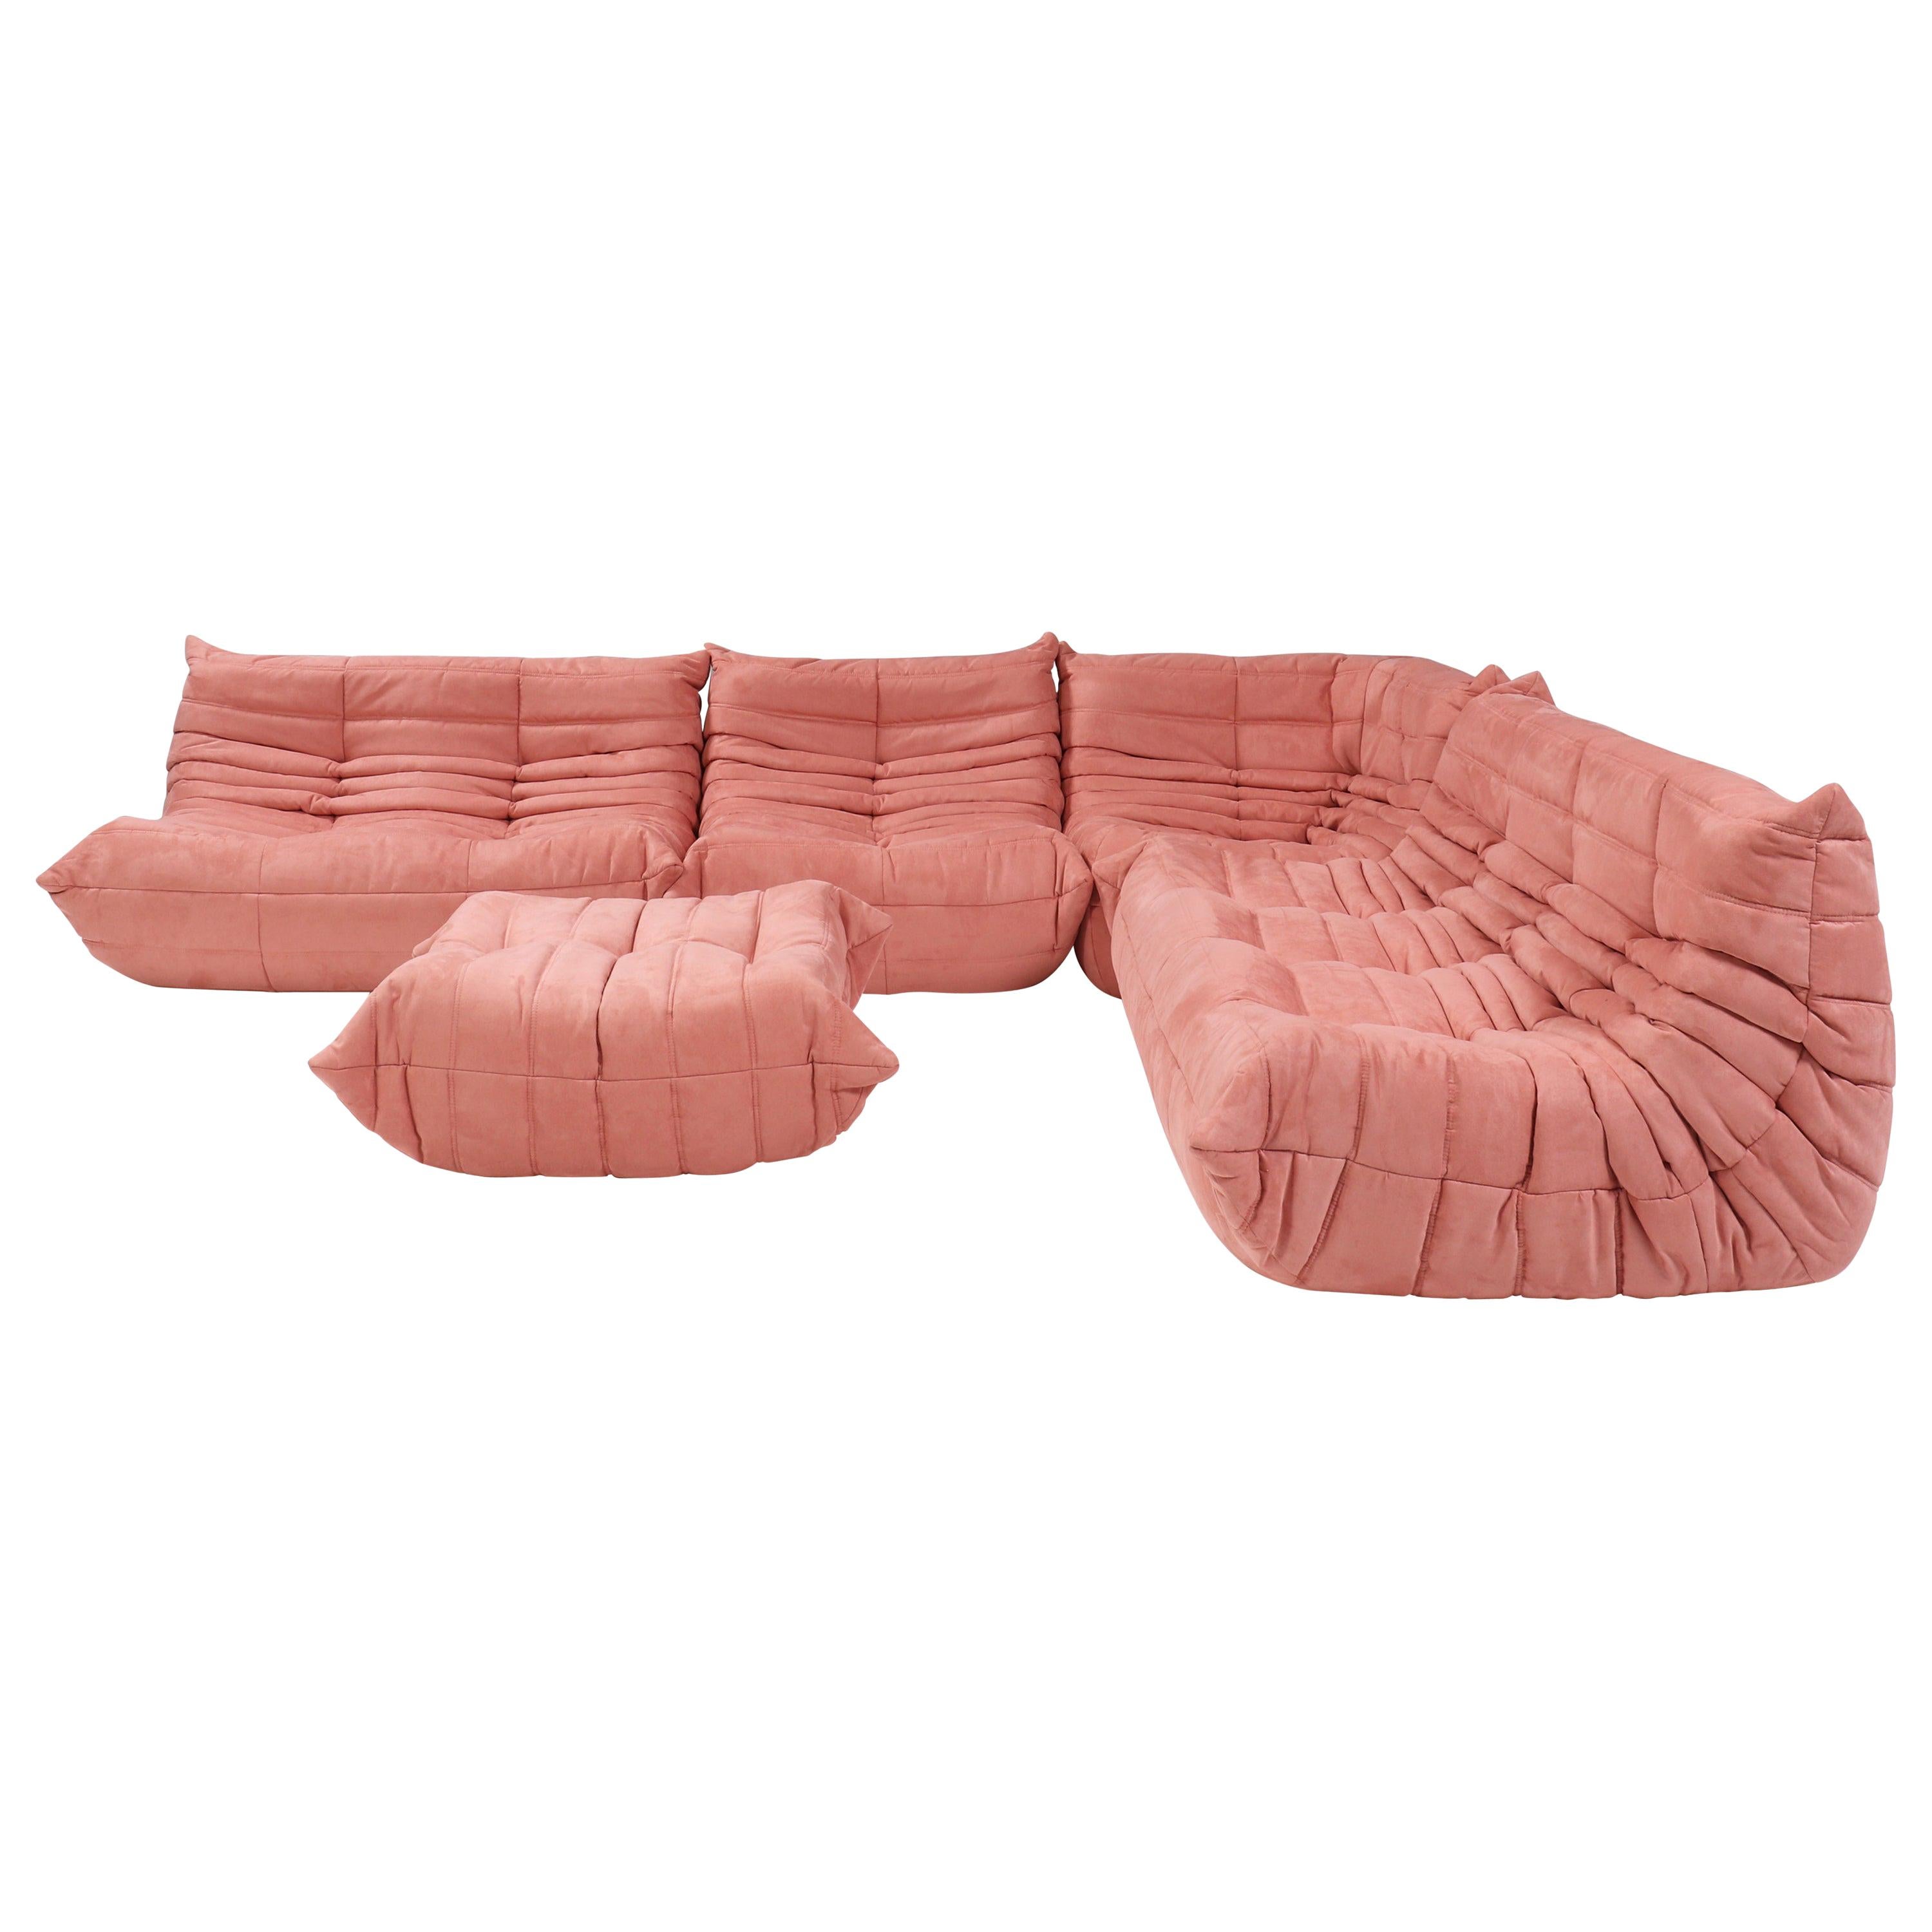 Ligne Roset by Michel Ducaroy Togo Pink Modular Sofa and Footstool, Set of 5